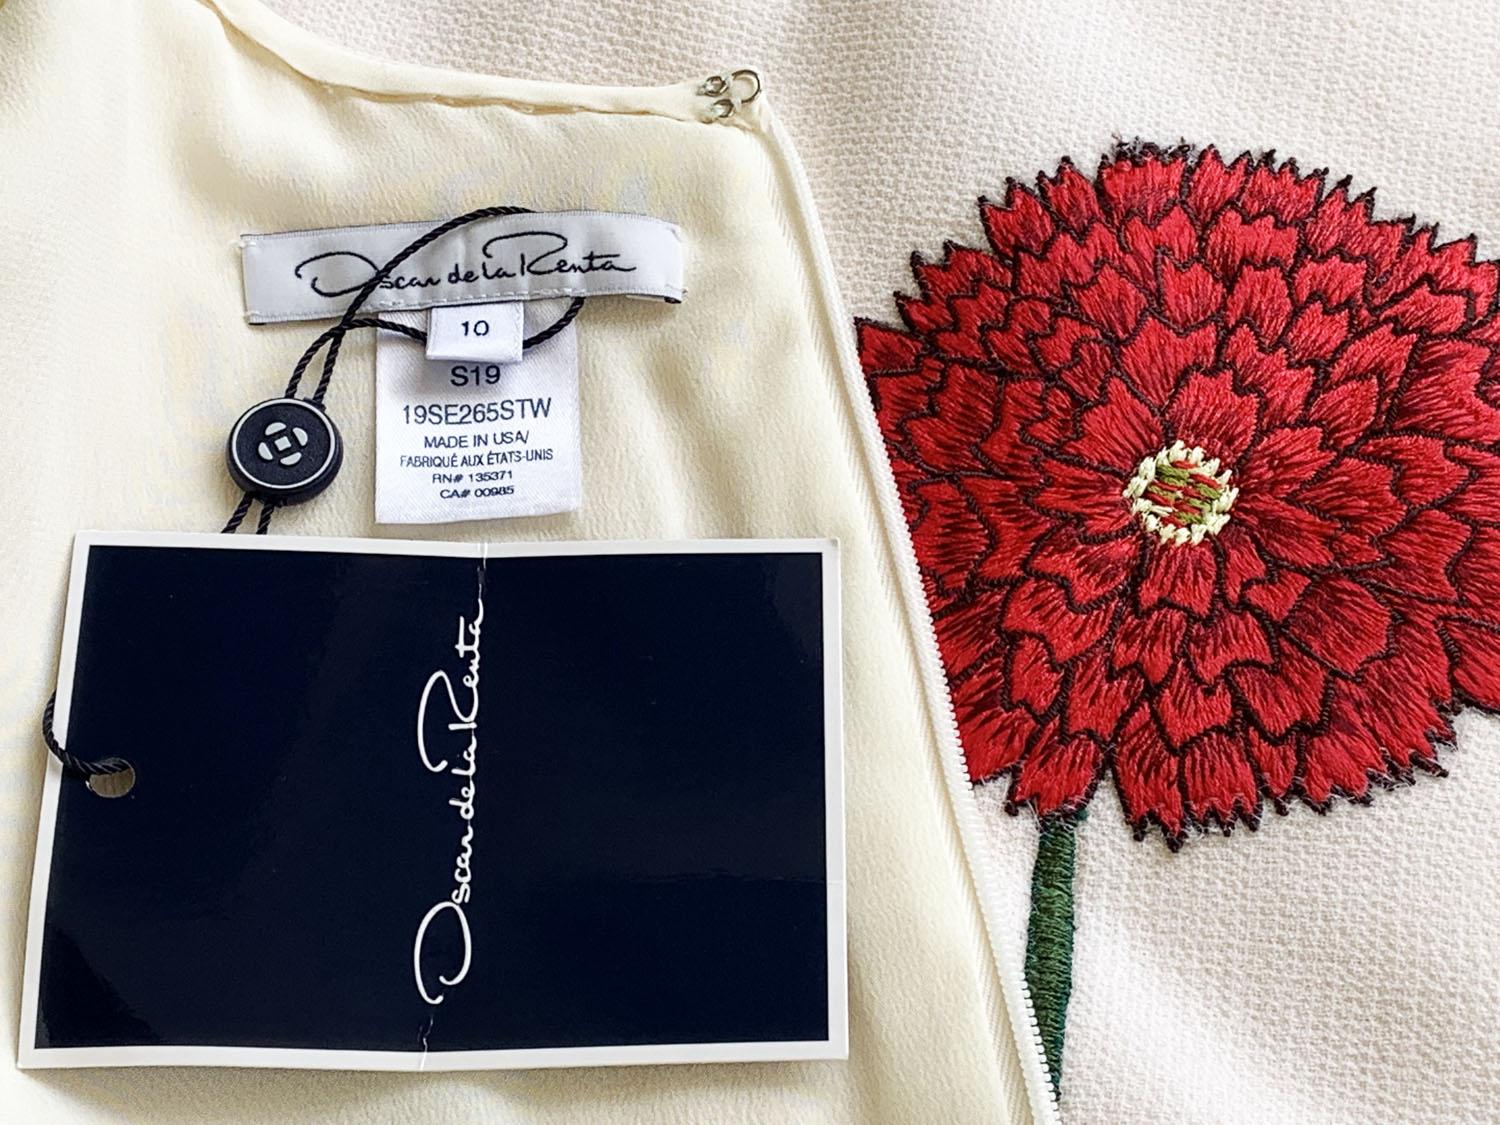 NWT Oscar de la Renta S/S 2019 Poppy Embroidered Stretch-Wool Crepe Dress US 10 For Sale 3